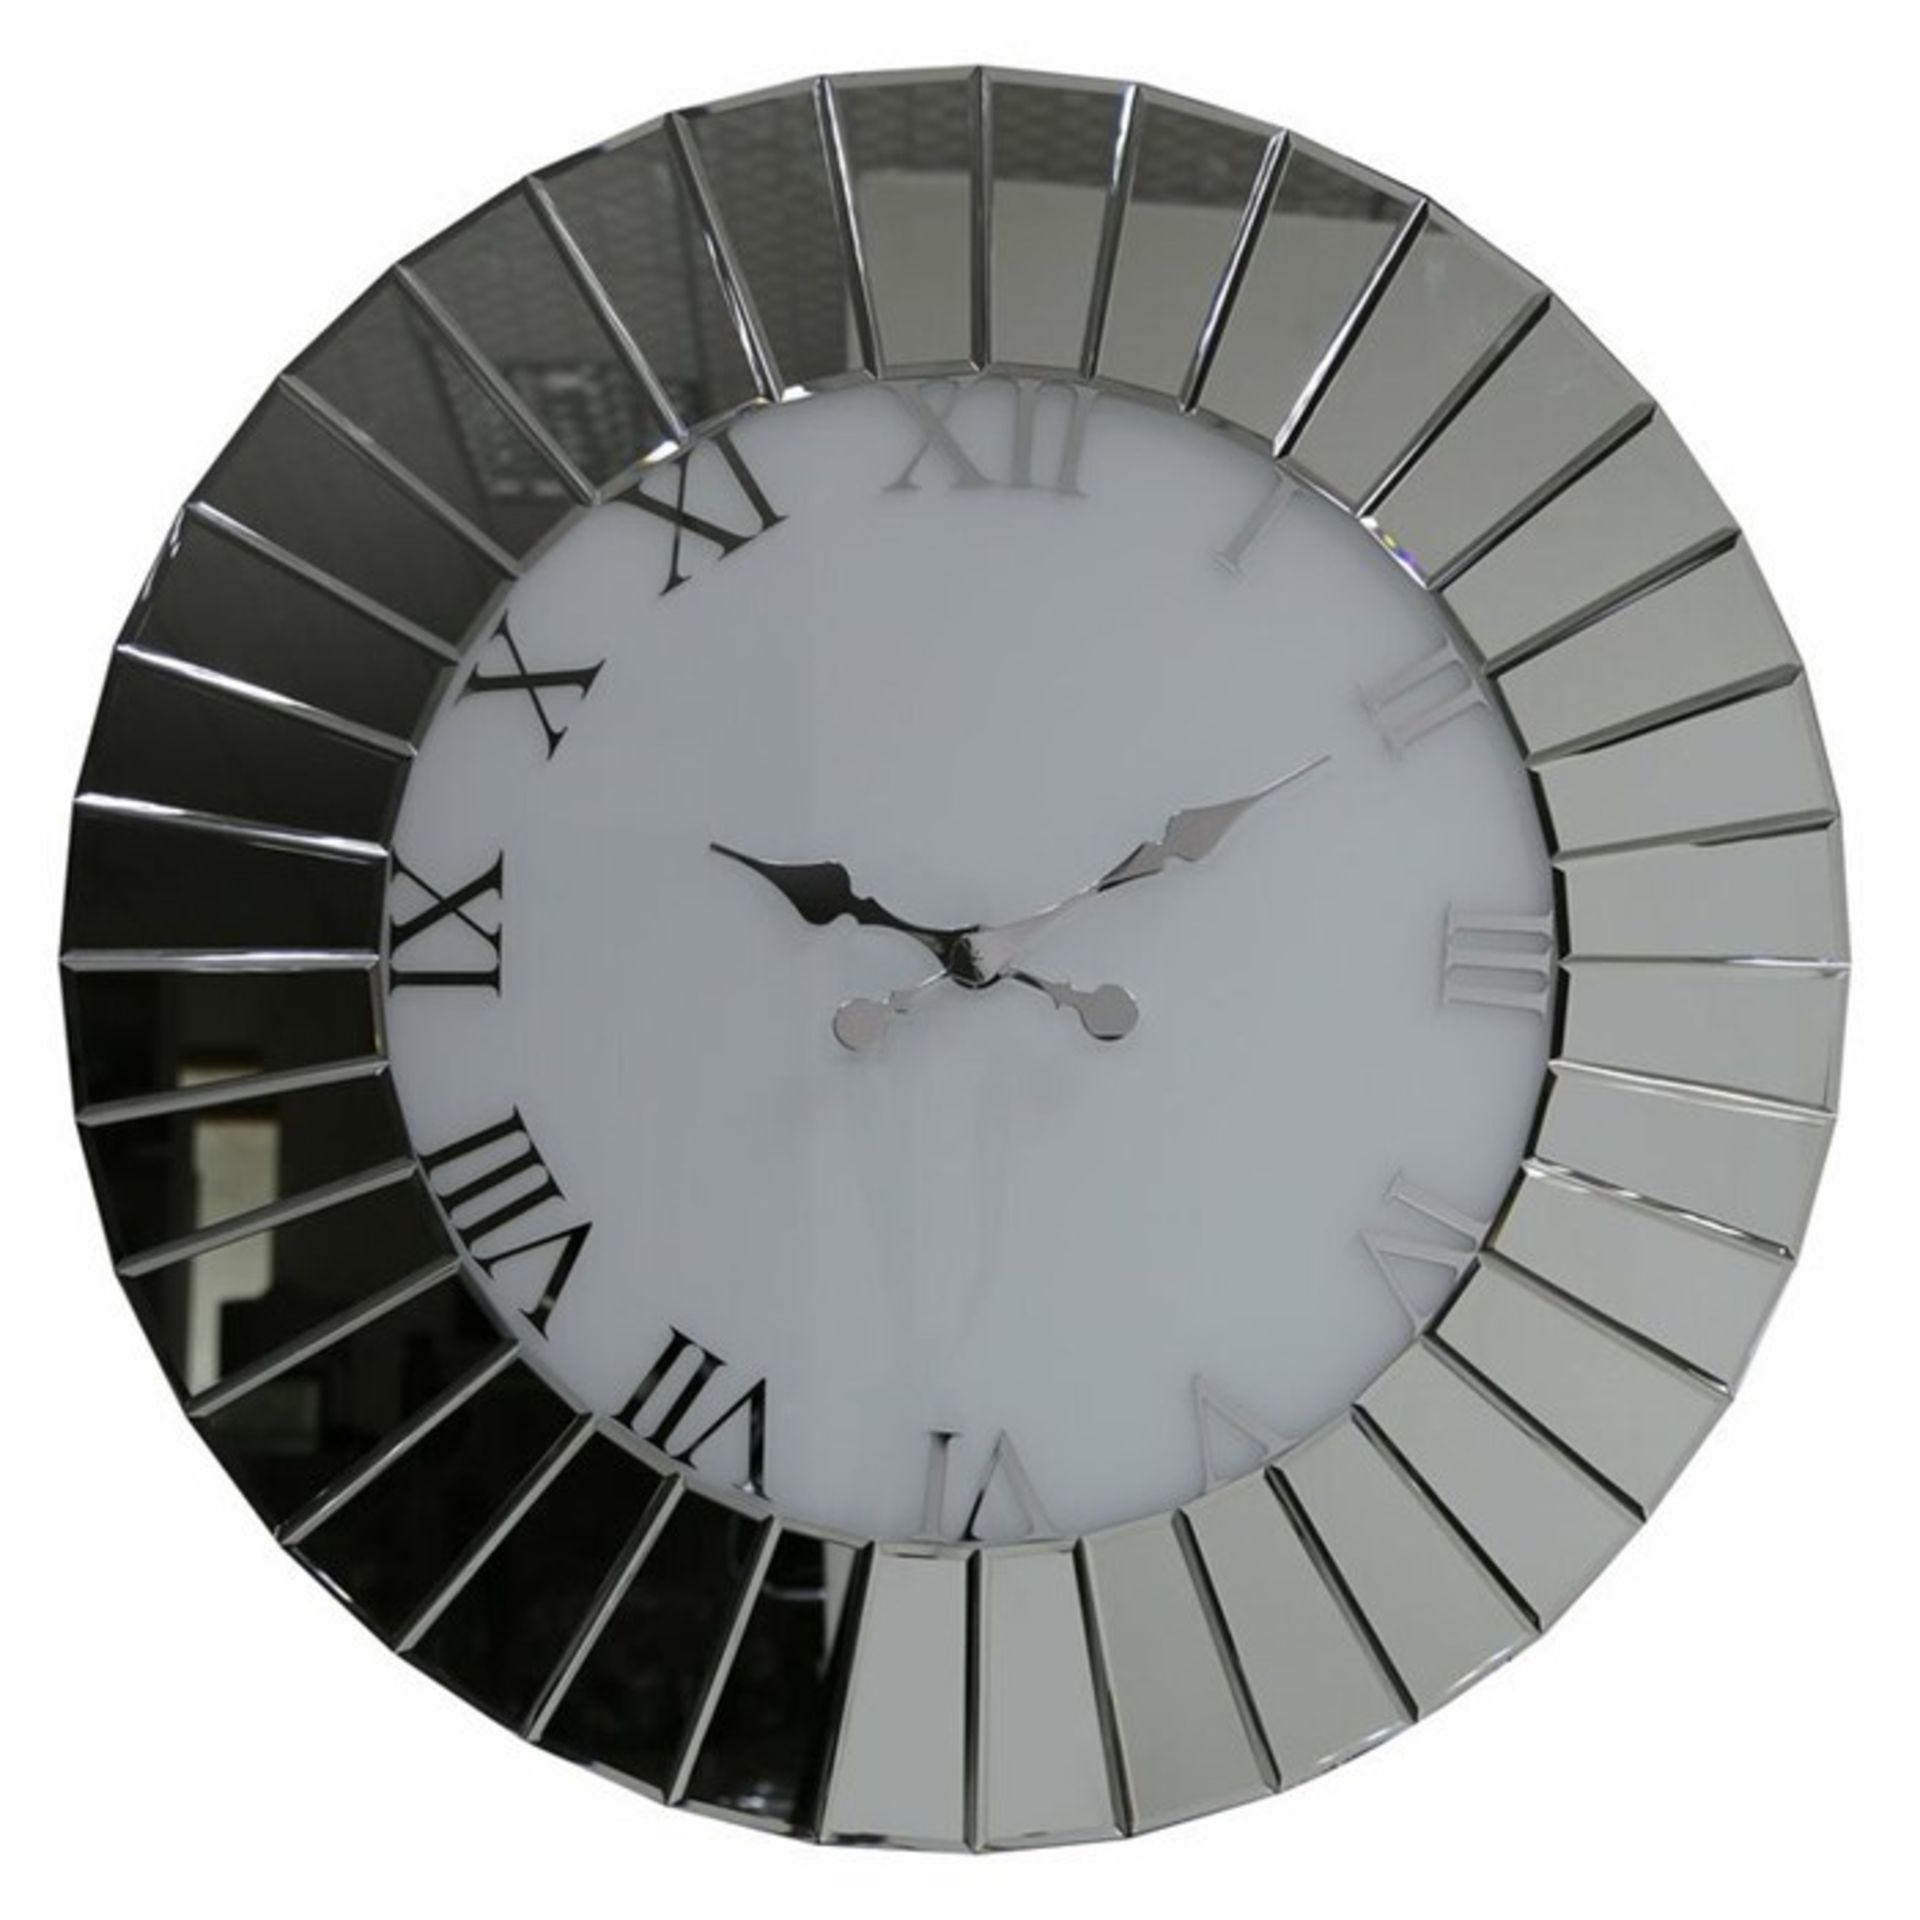 Canora GreyDurham Oversized Round Mirror Wall Clock13465/19MRFO1207